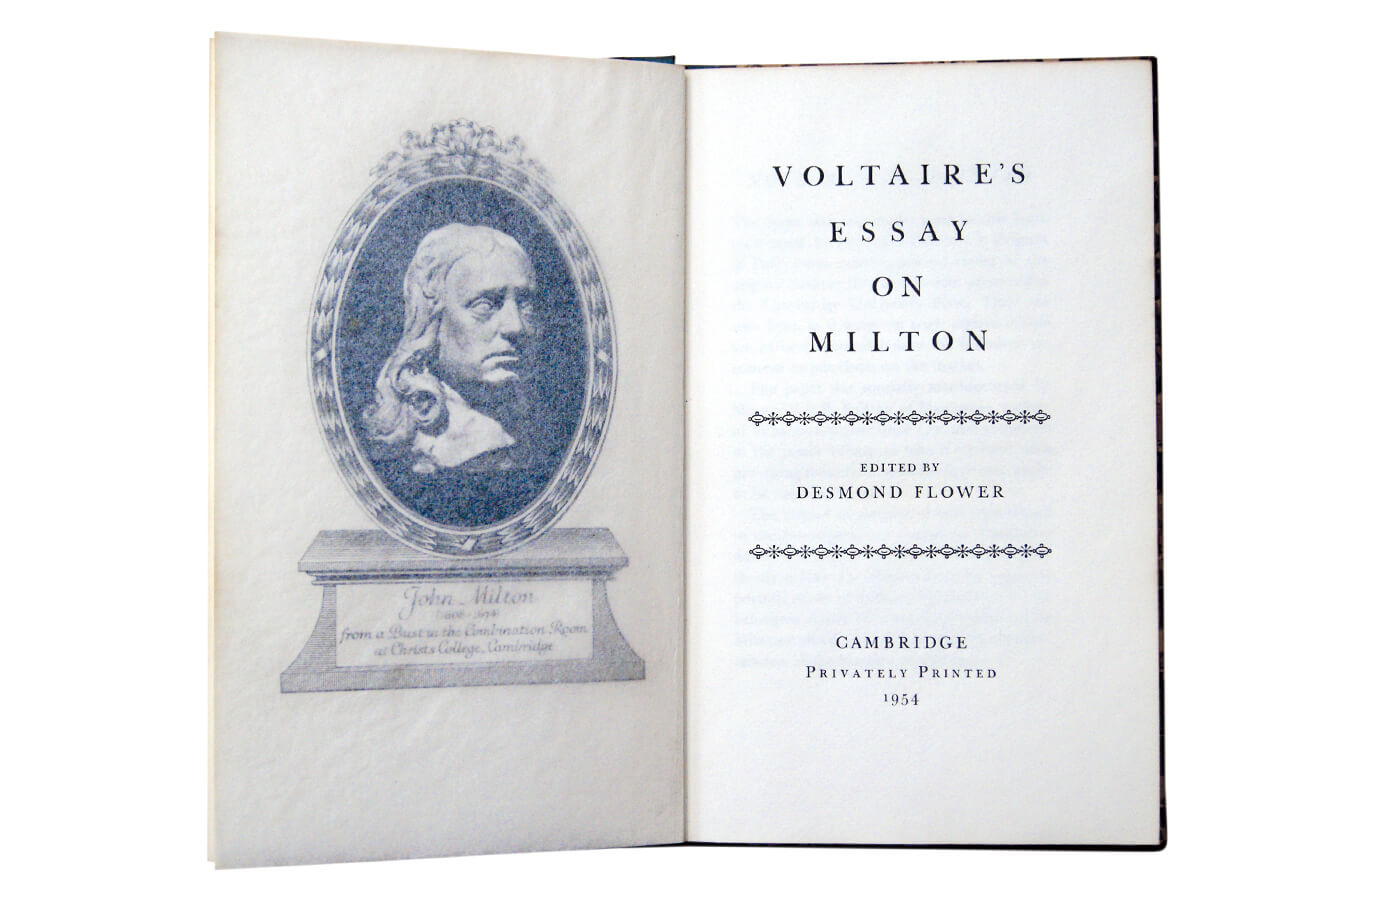 Voltaire’s Essay on Milton